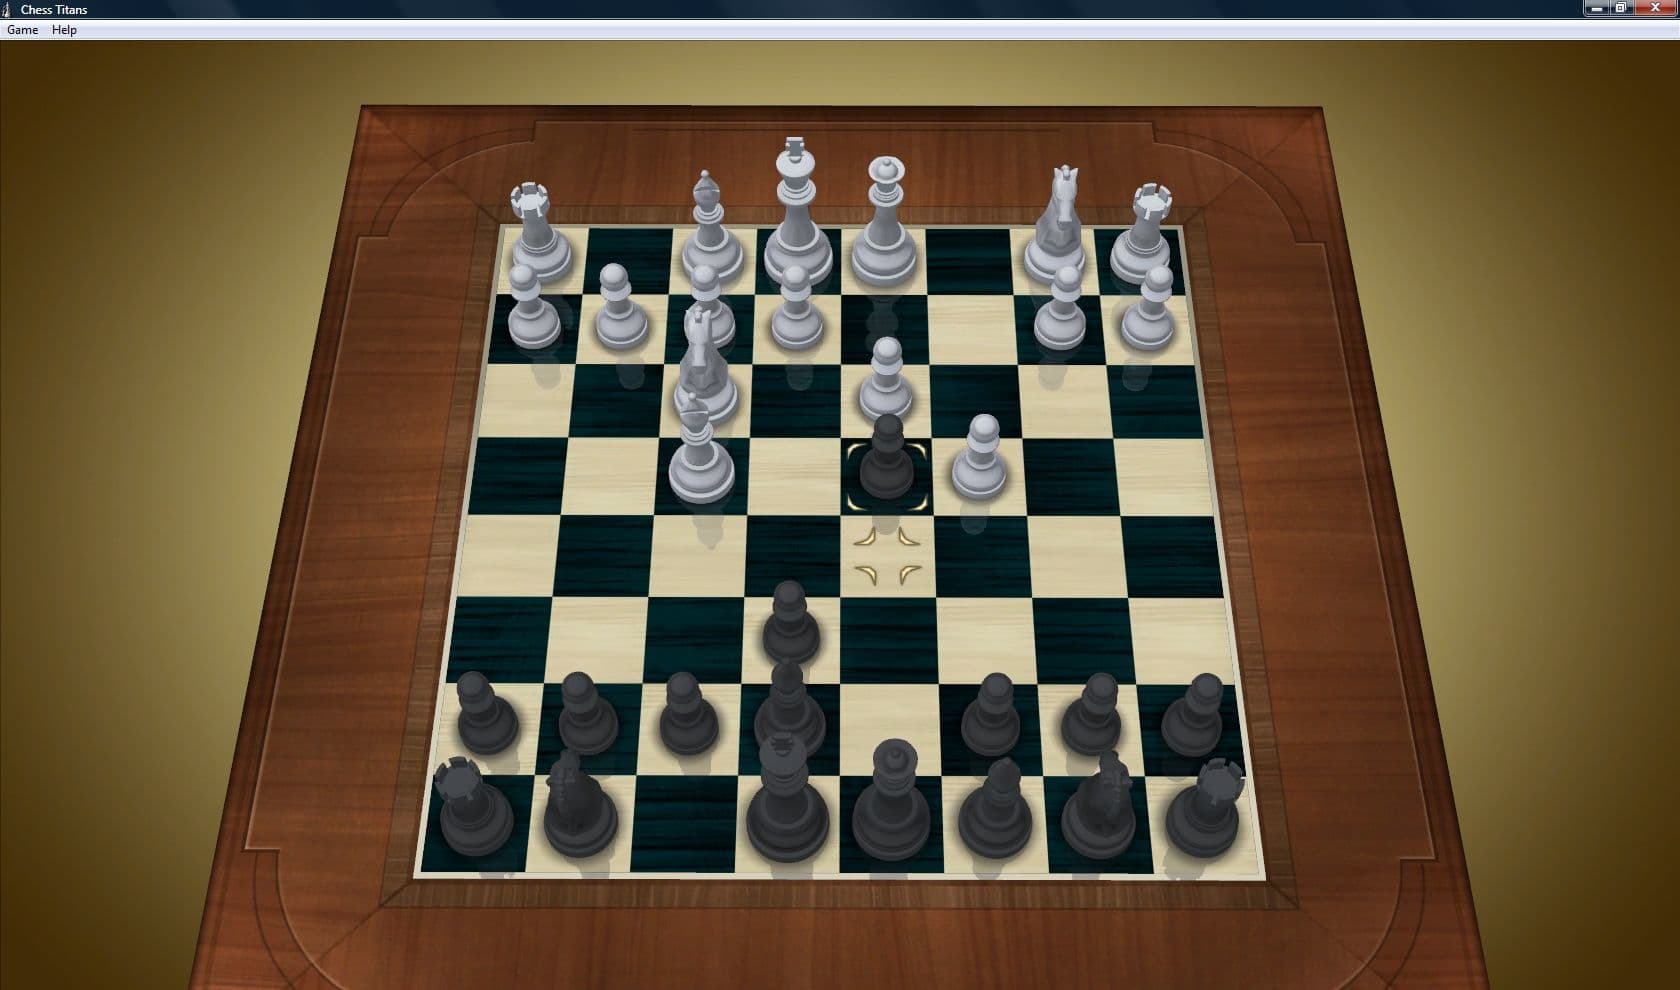 windows 7 chess titans game free download